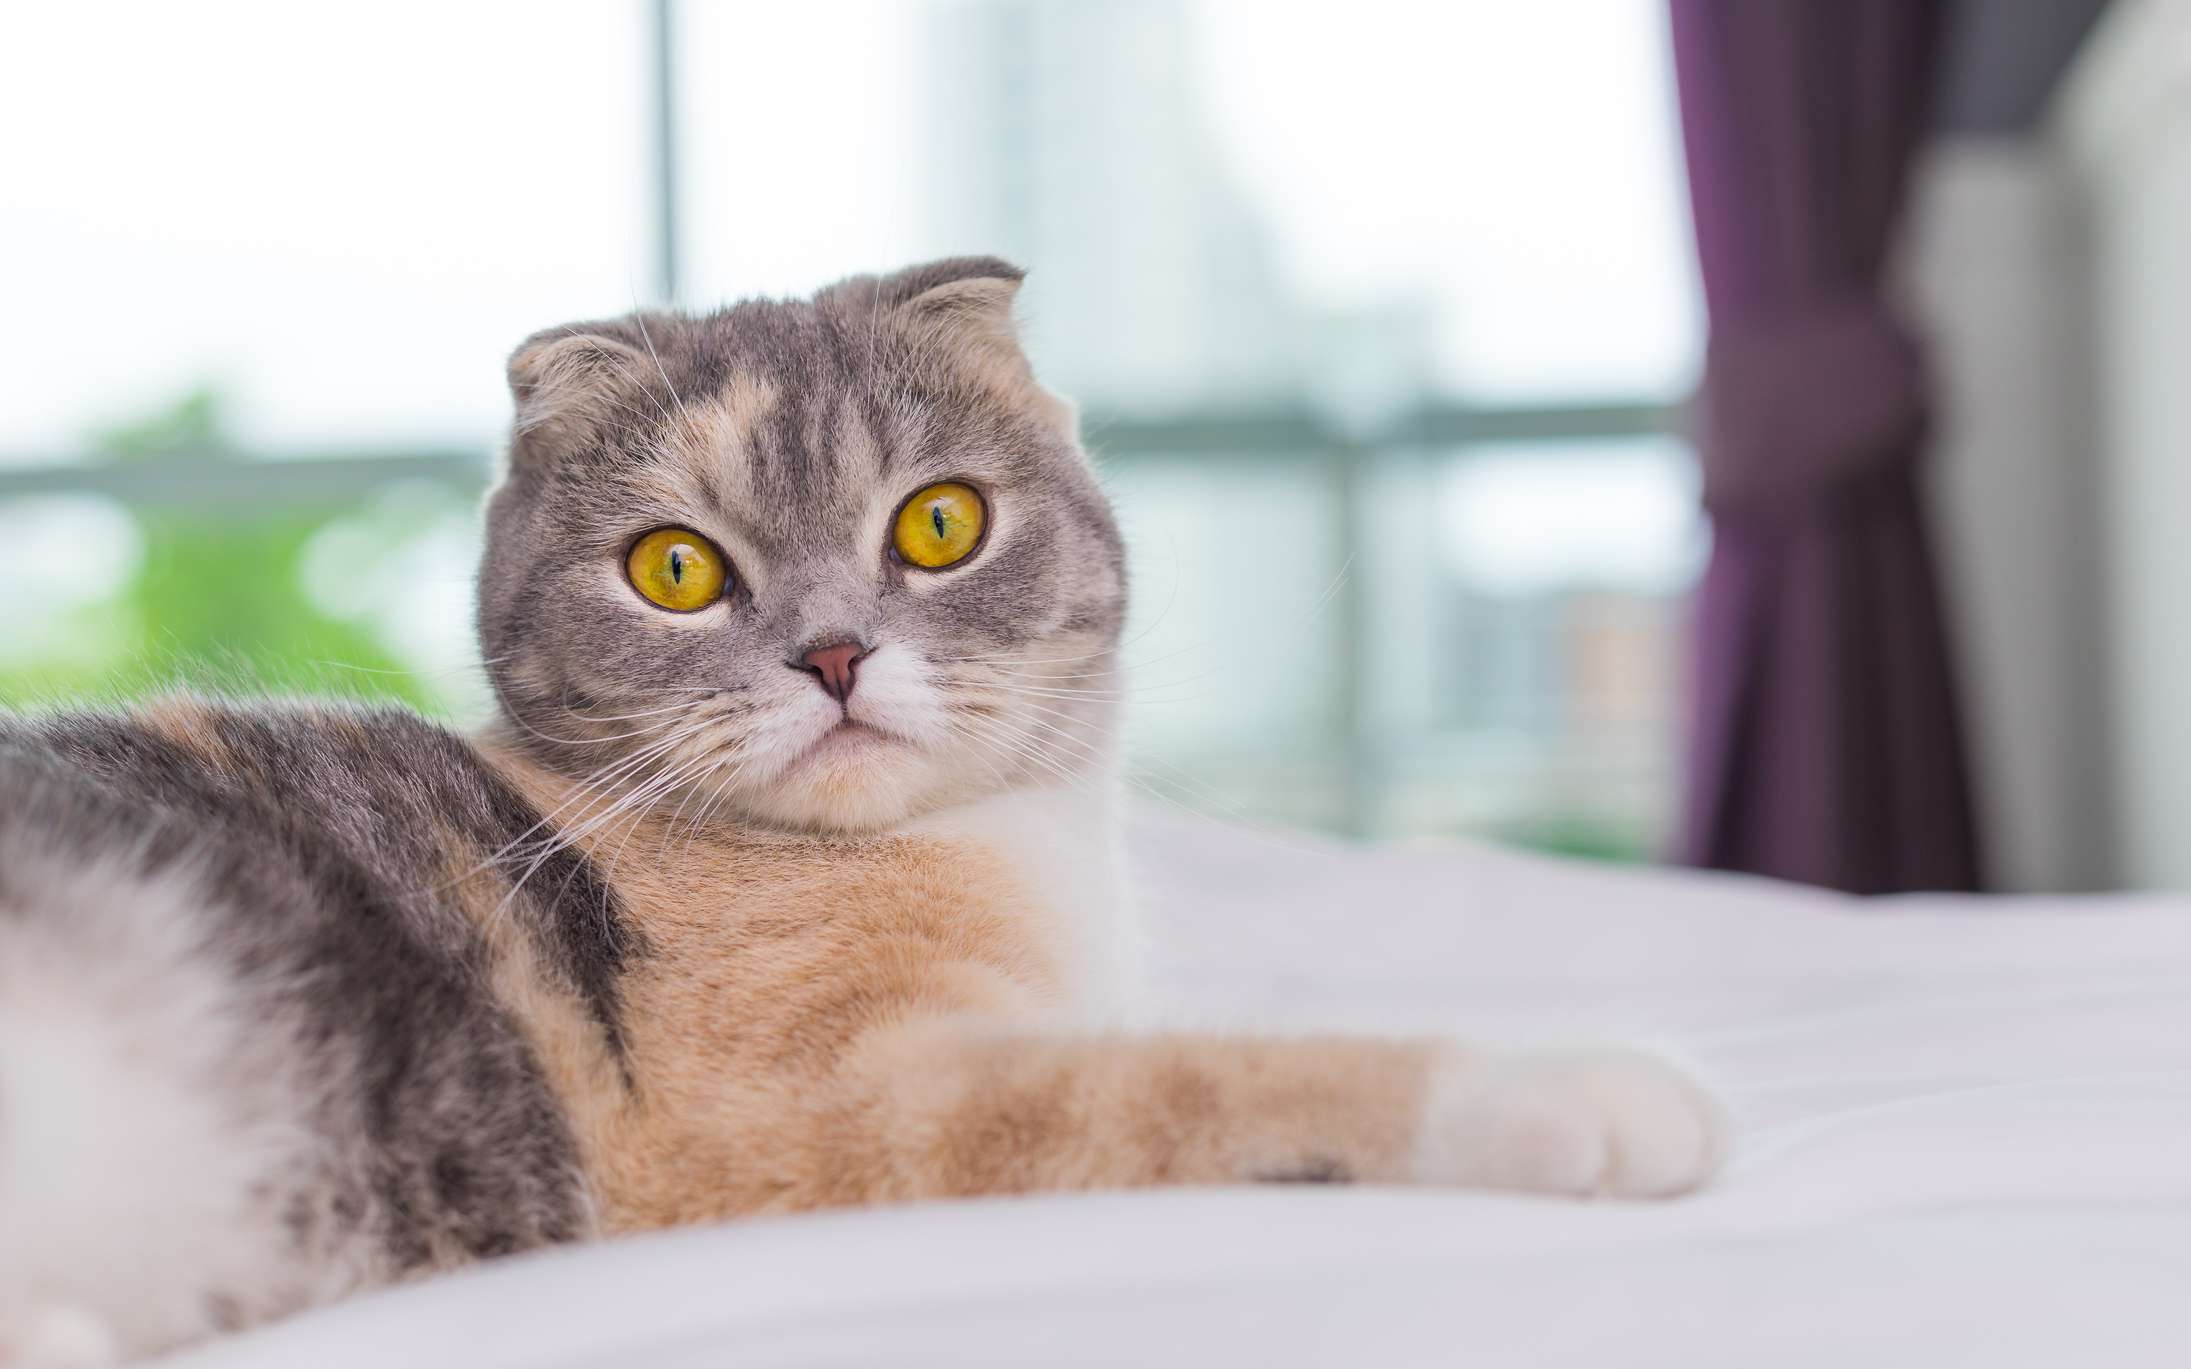 A Scottish Fold cat on a bed.